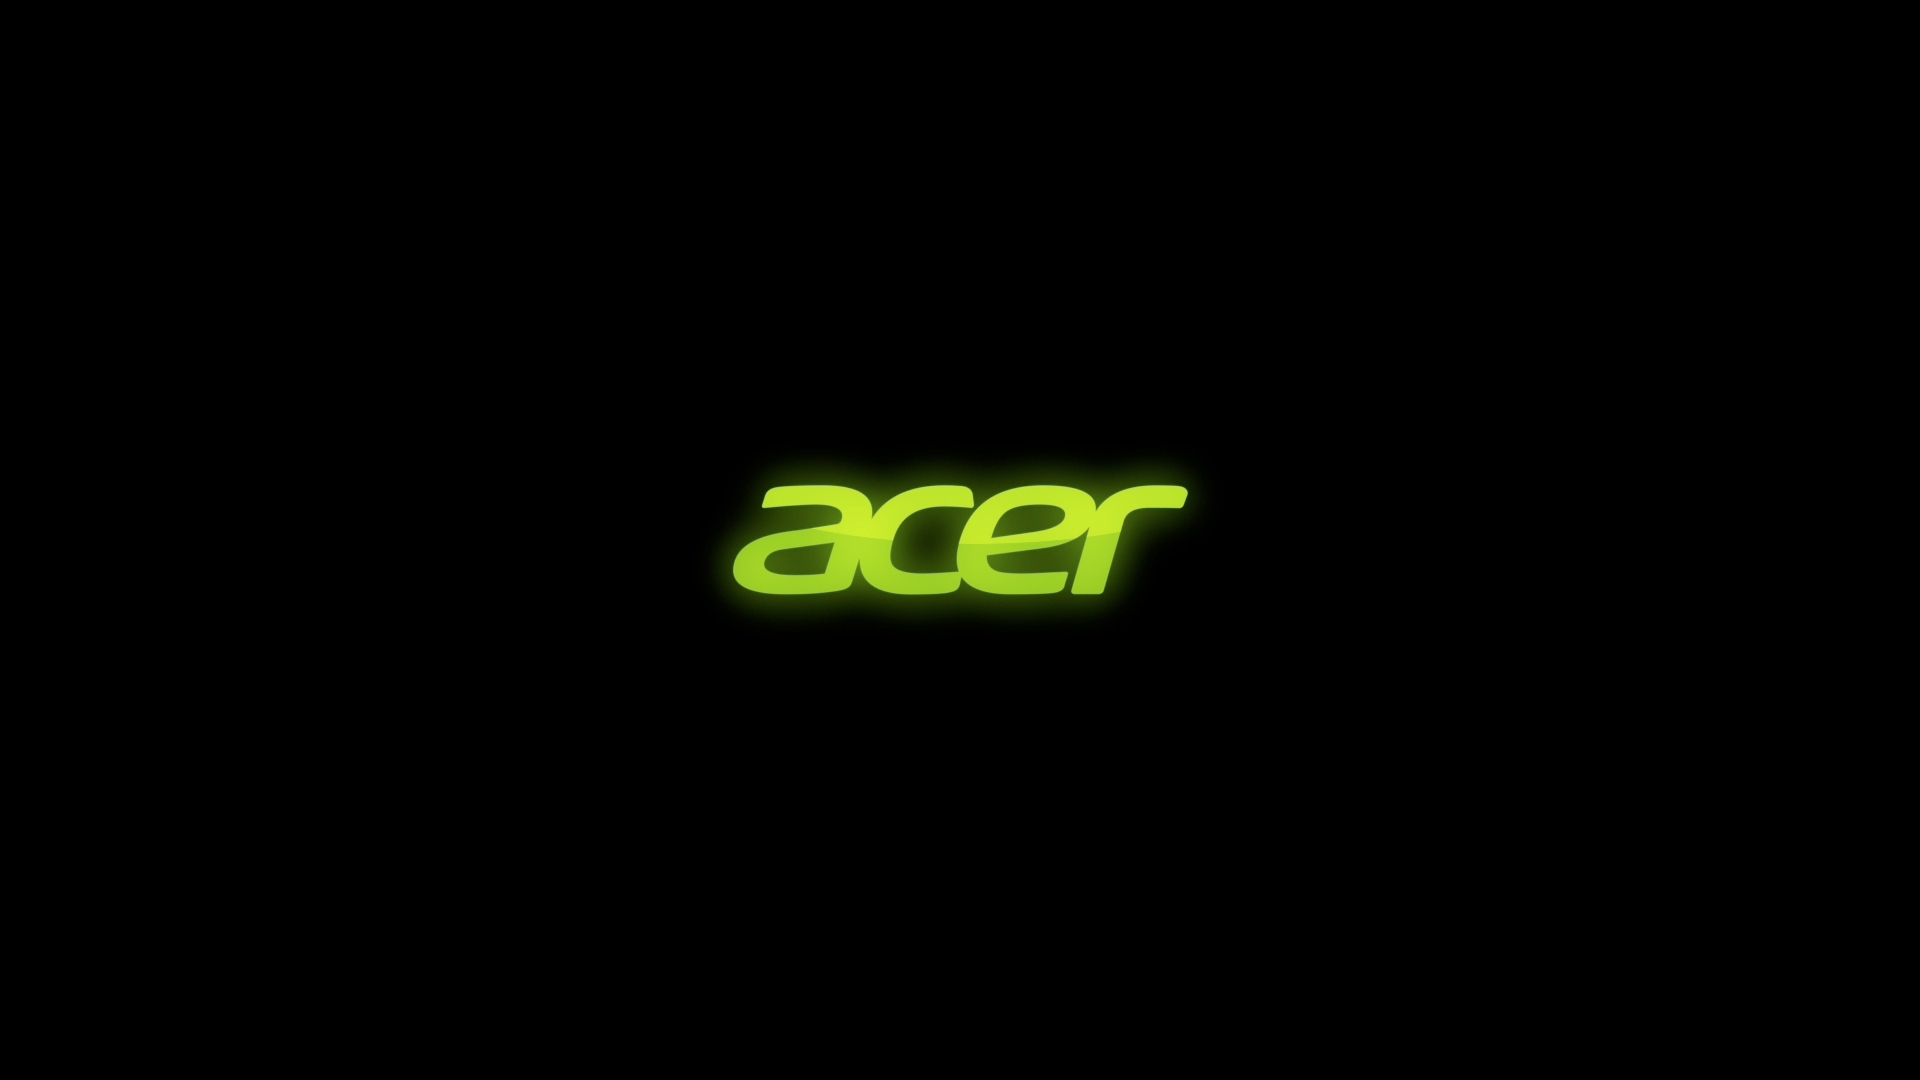 Wallpaper Acer Firm Green Black Full HD 1080p